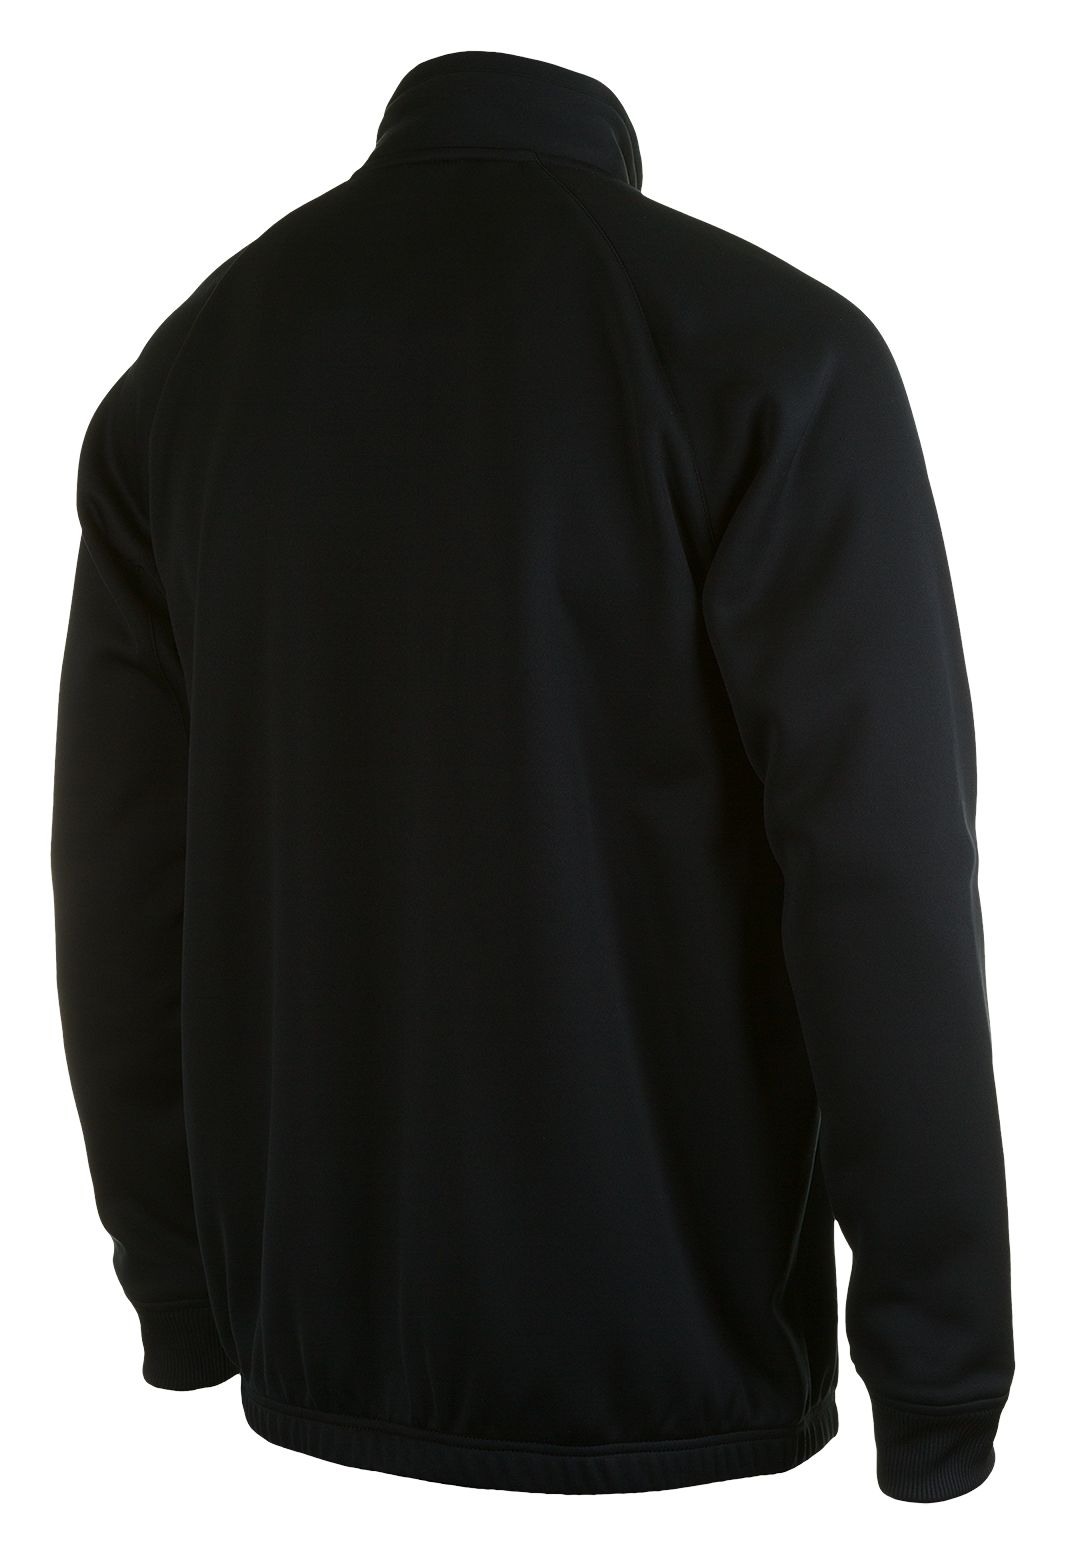 LFC Walkout Jacket, Black image number 0